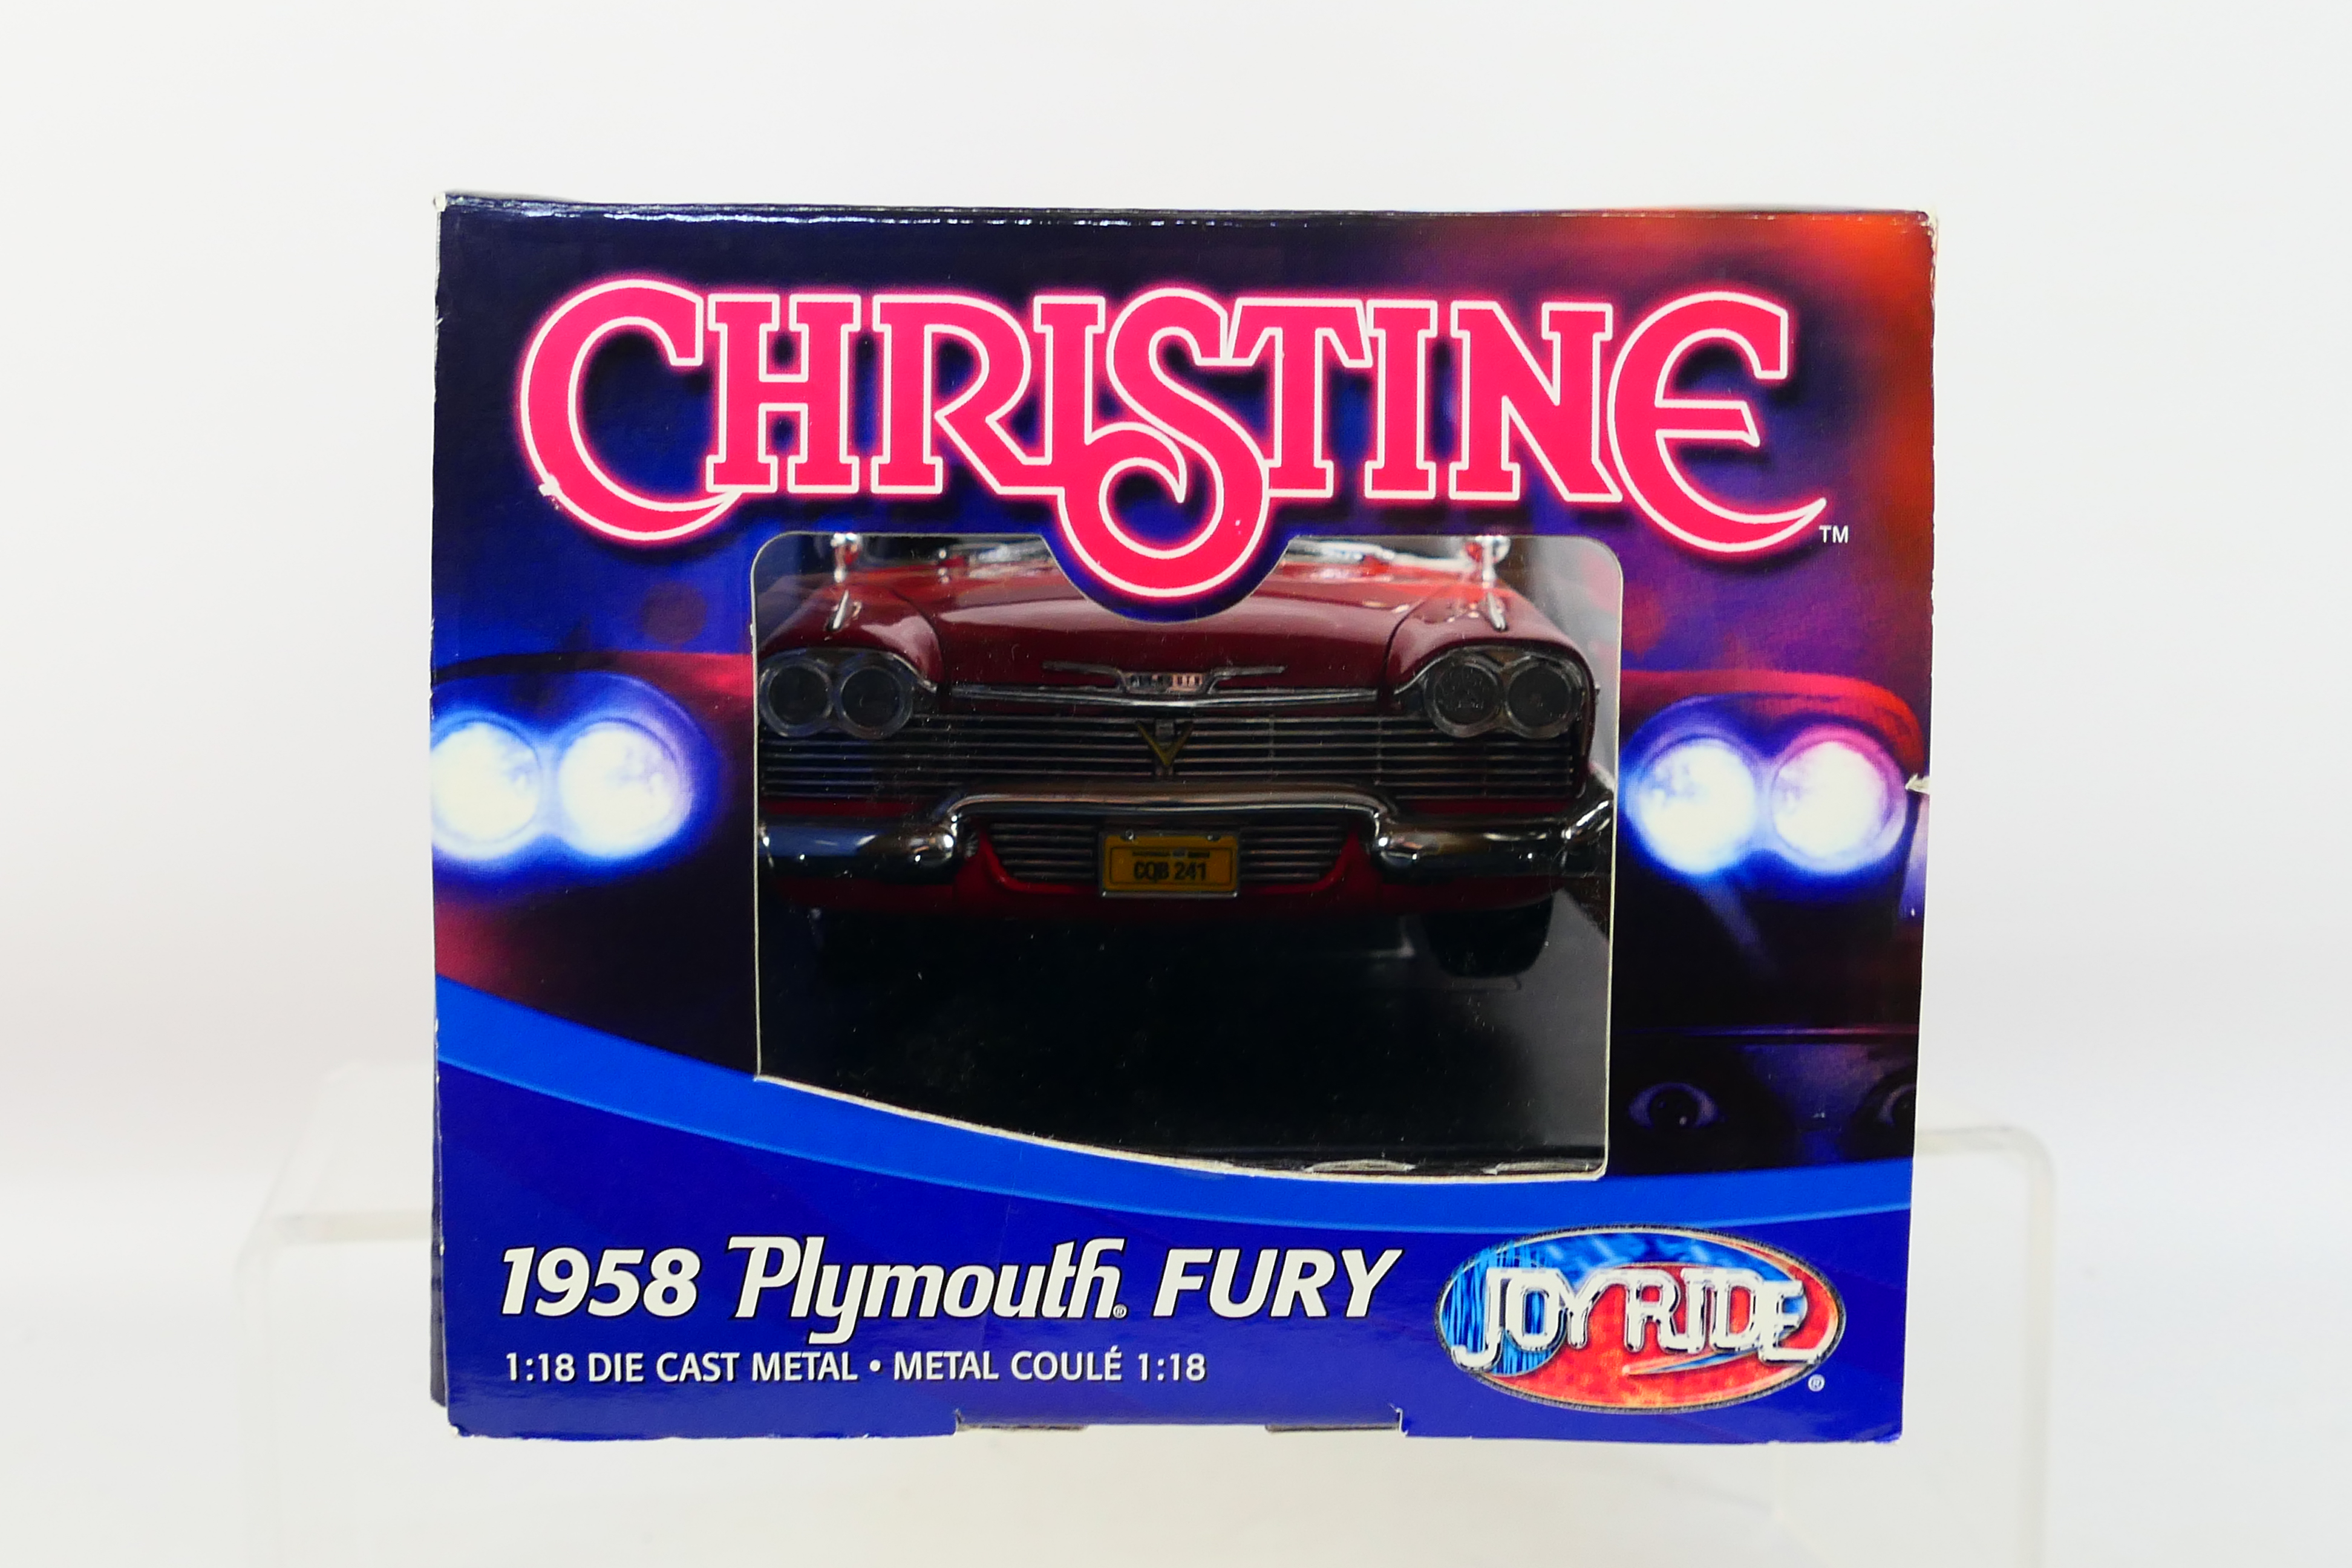 Joyride - A boxed Joyride #33853 1:18 scale 'Christine' 1958 Plymouth Fury. - Image 3 of 5